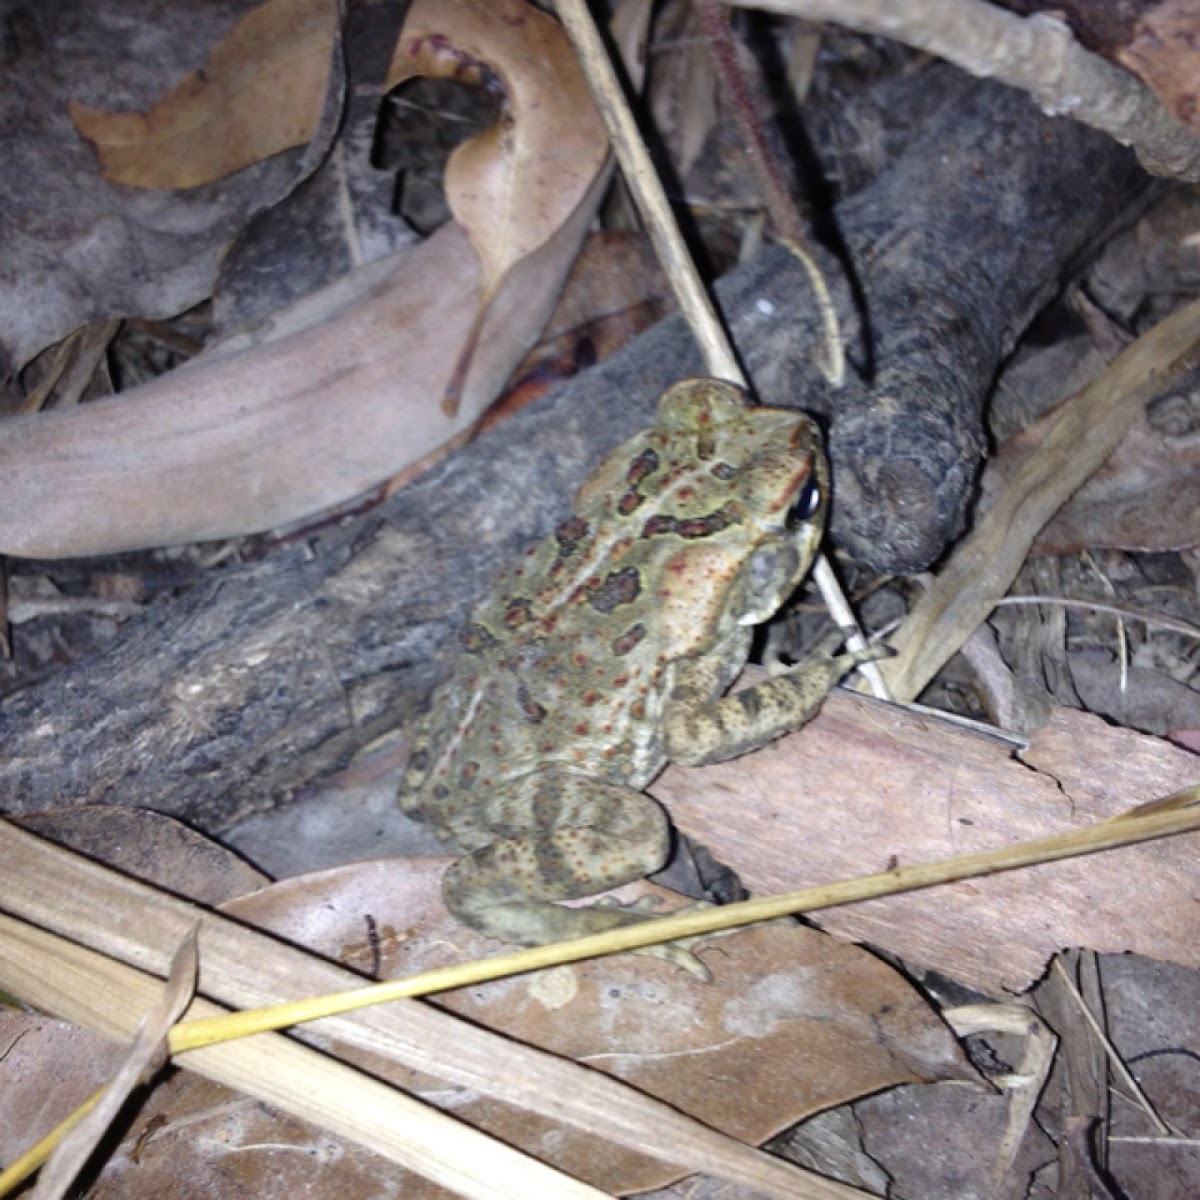 Cane toad juvenile